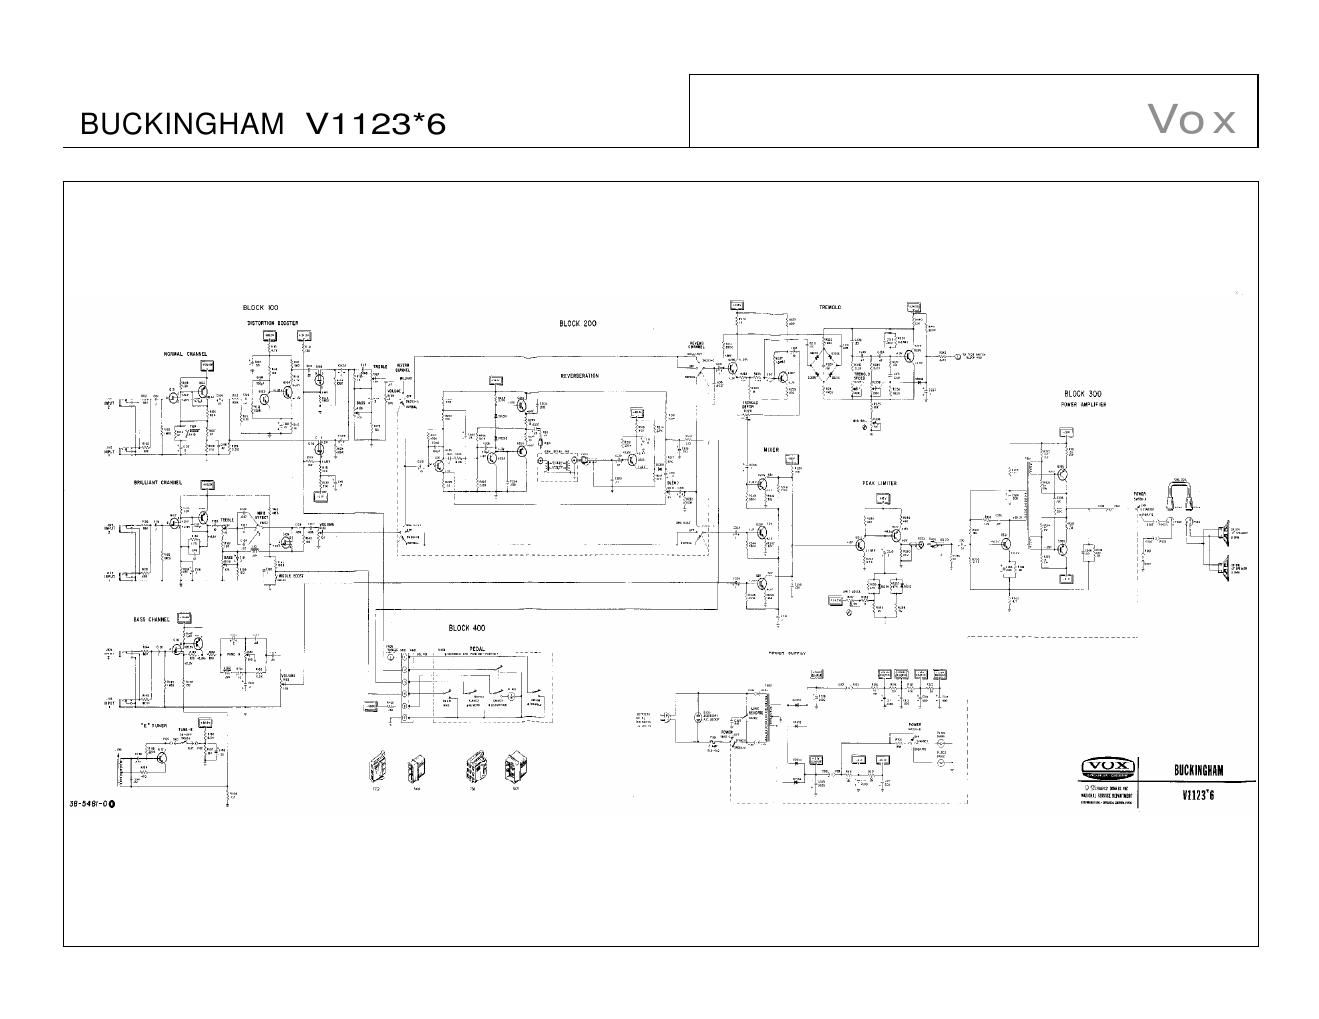 vox buckingham v1123 schematic